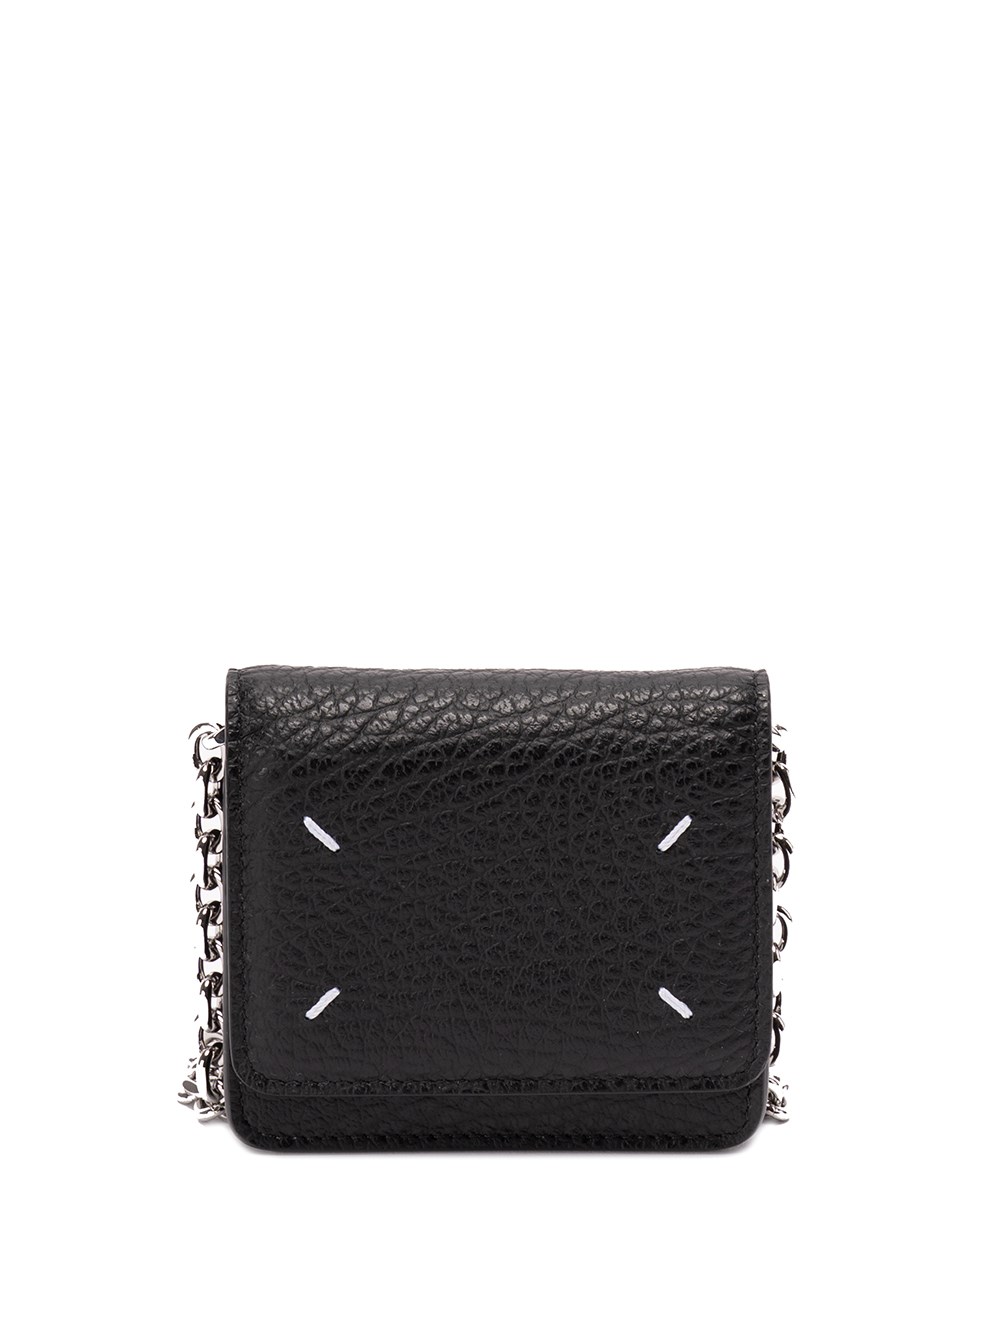 Maison Margiela Four Stitches chain wallet - Black